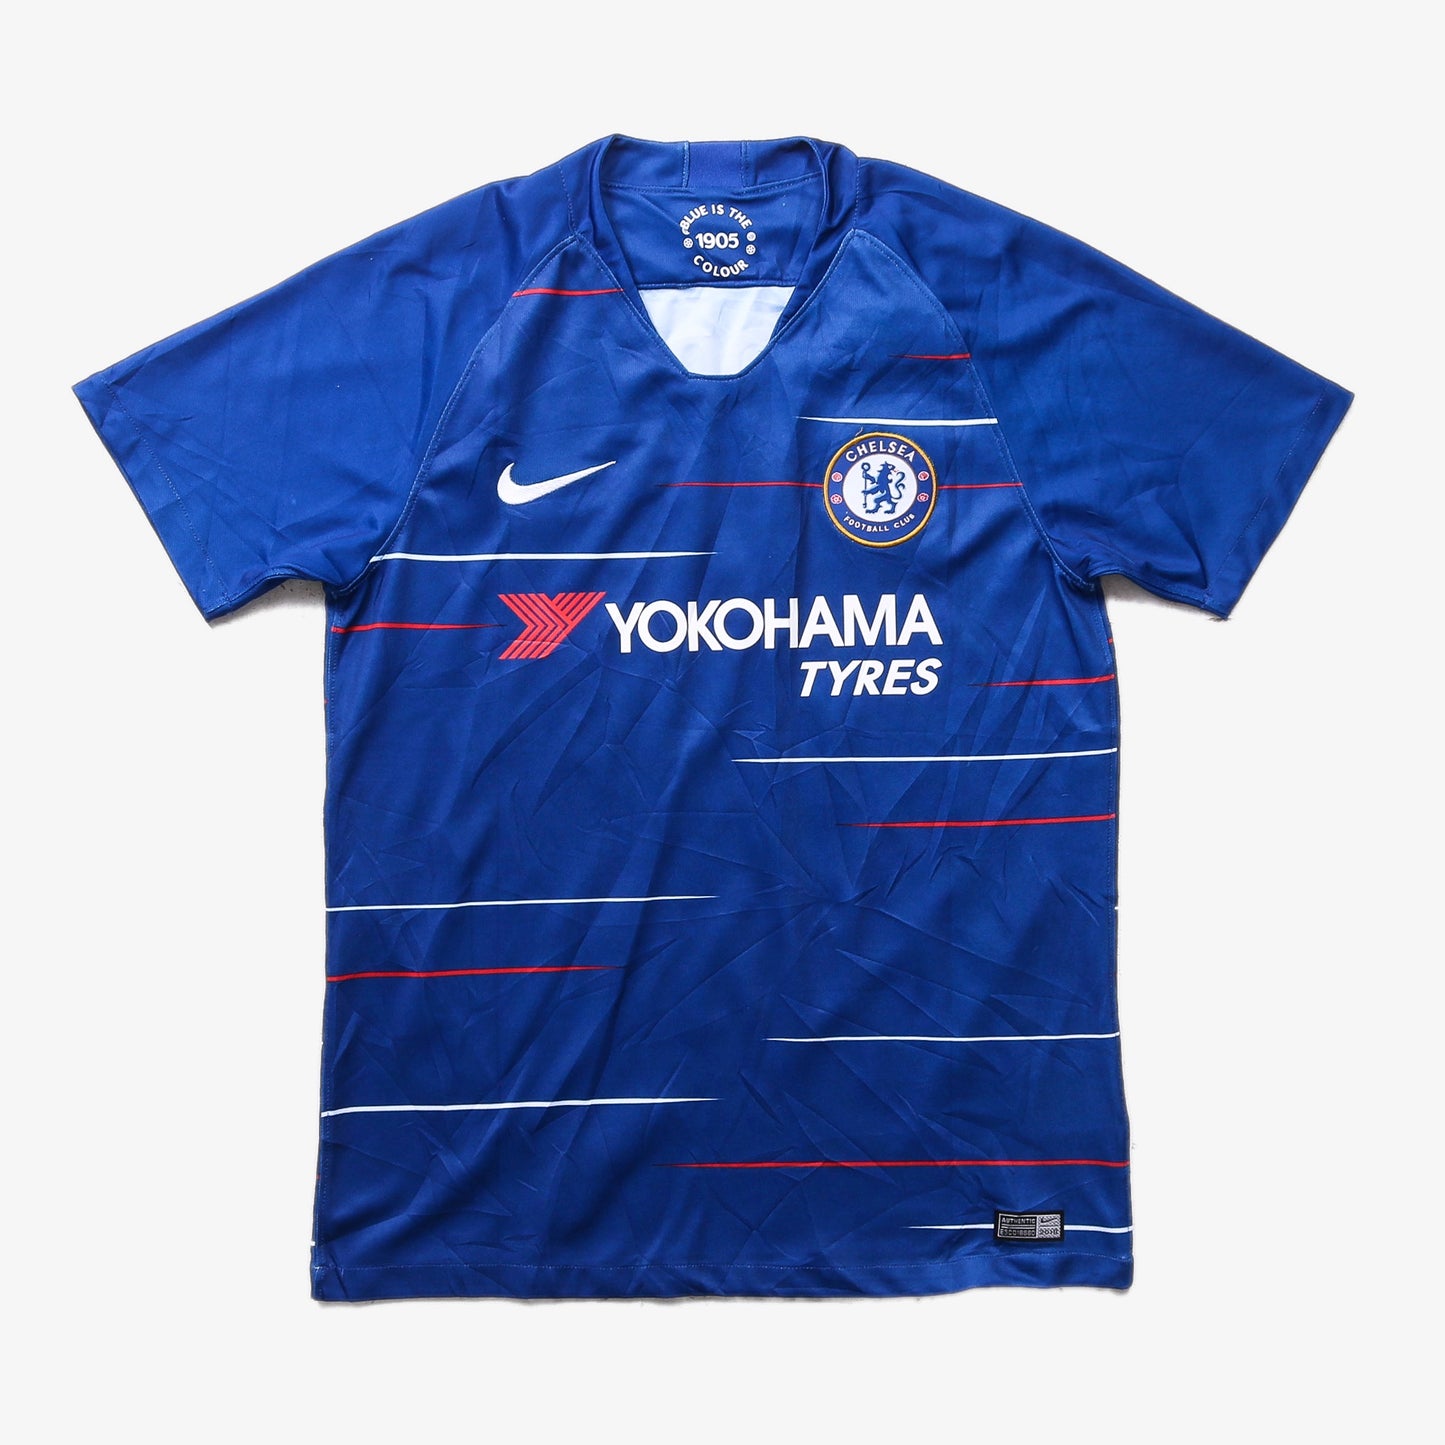 Chelsea Football Shirt - American Madness